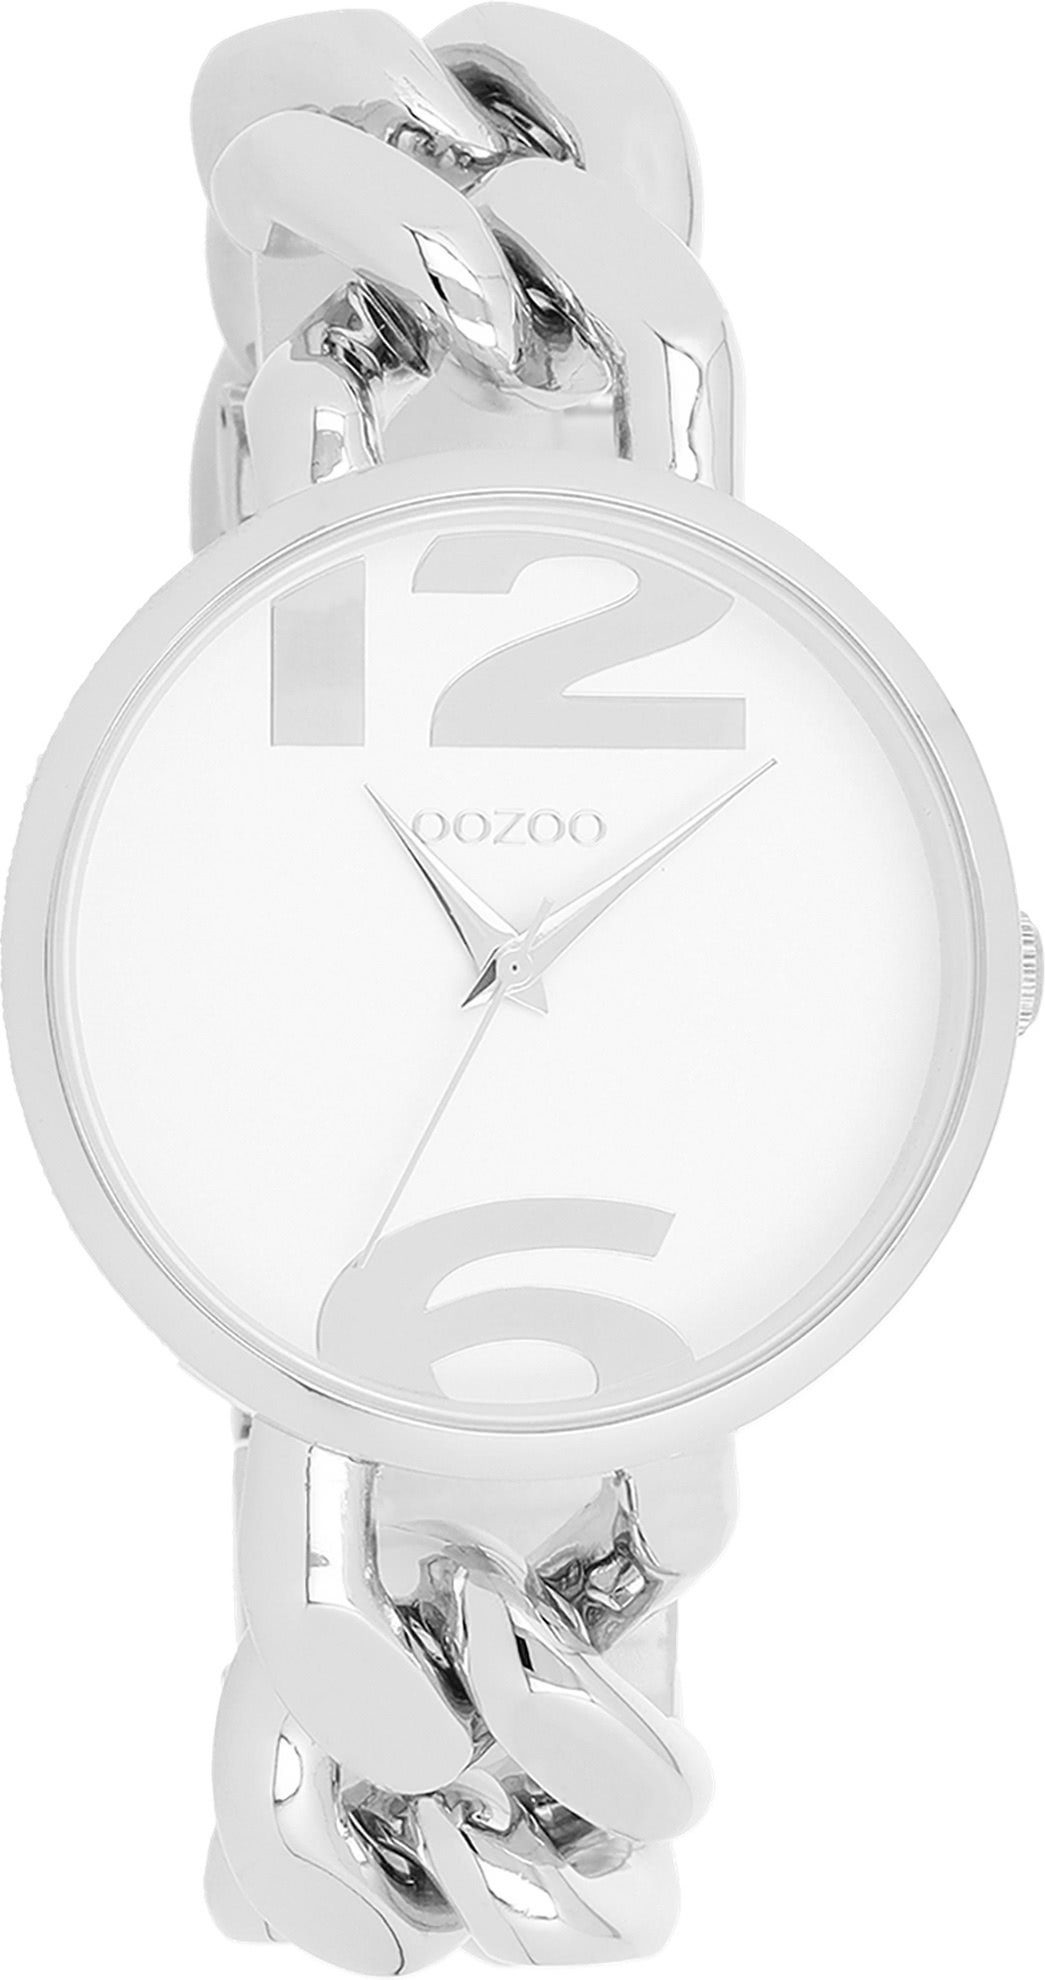 Oozoo Timepieces Metallarmband, Quarzuhr Analog, Fashion-Style rund, OOZOO Damenuhr Armbanduhr (ca. 40mm) groß Damen